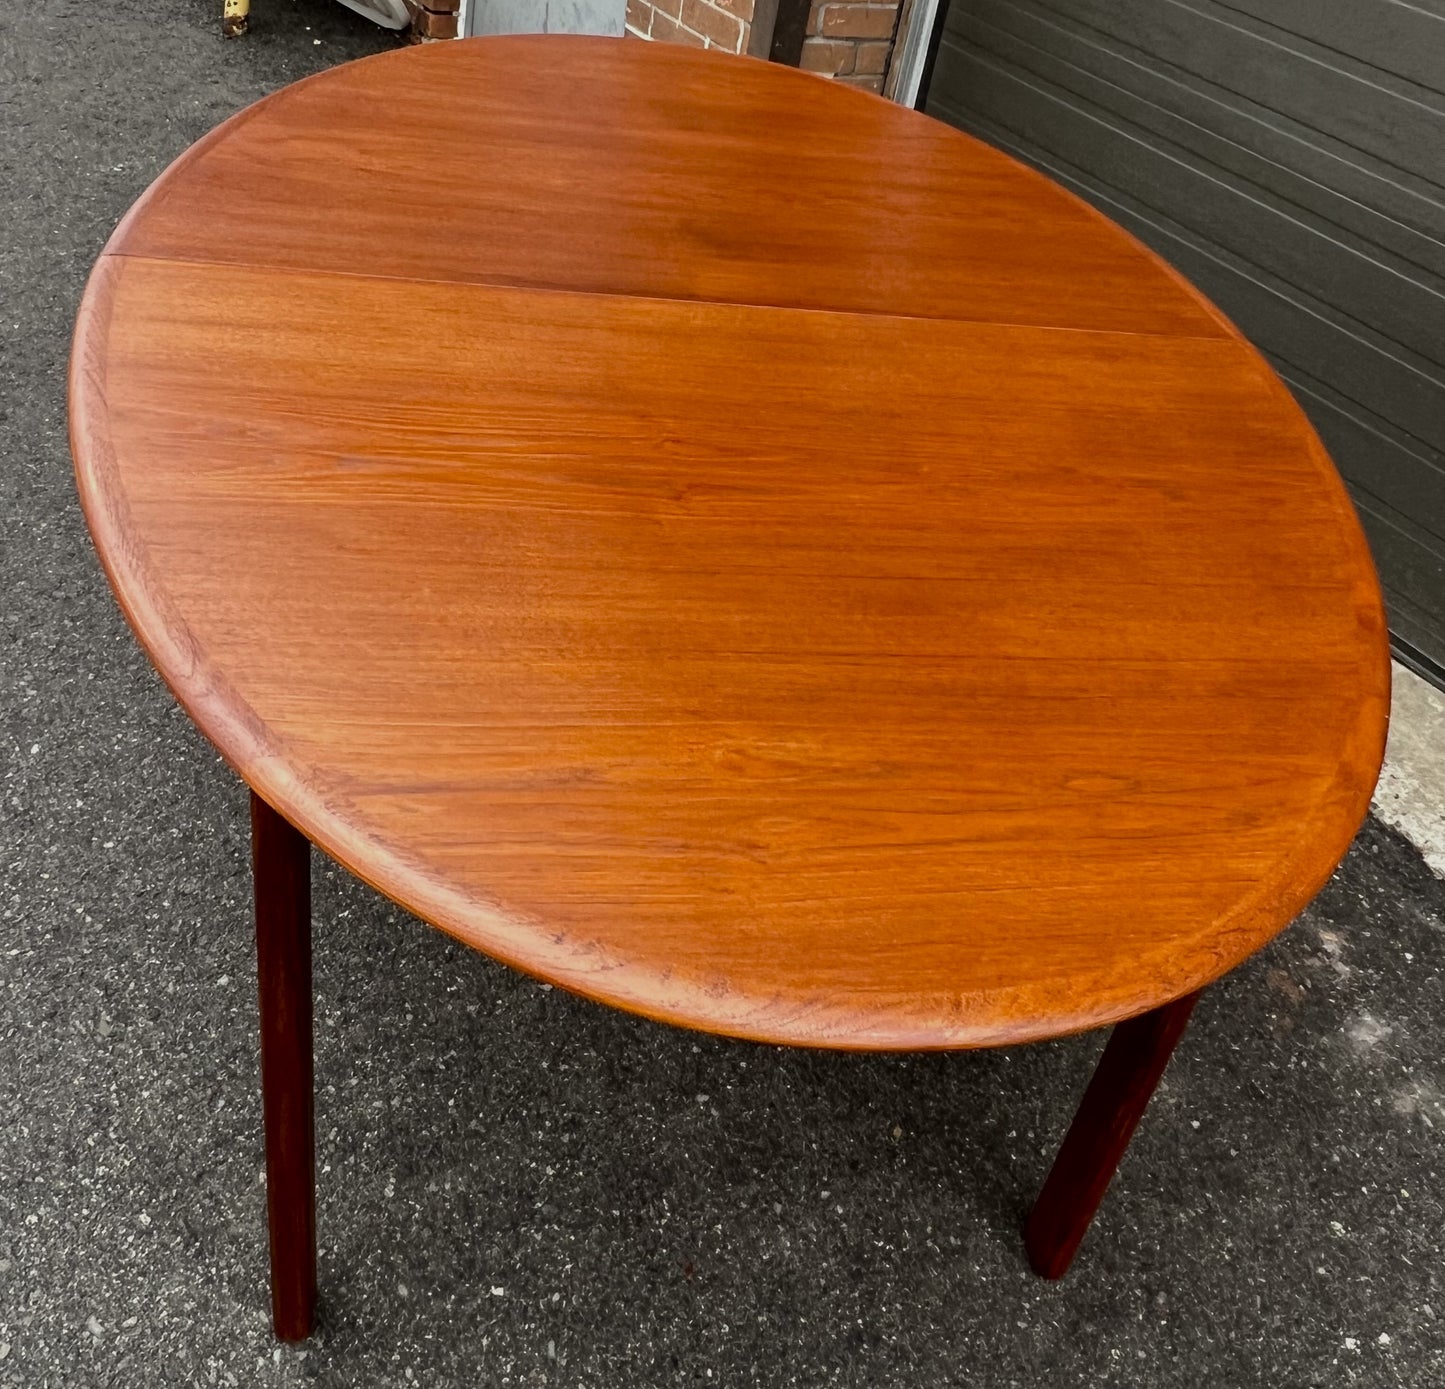 REFINISHED Mid Century Modern Teak Table Oval w 1 Leaf Self-Storing 65"- 87"